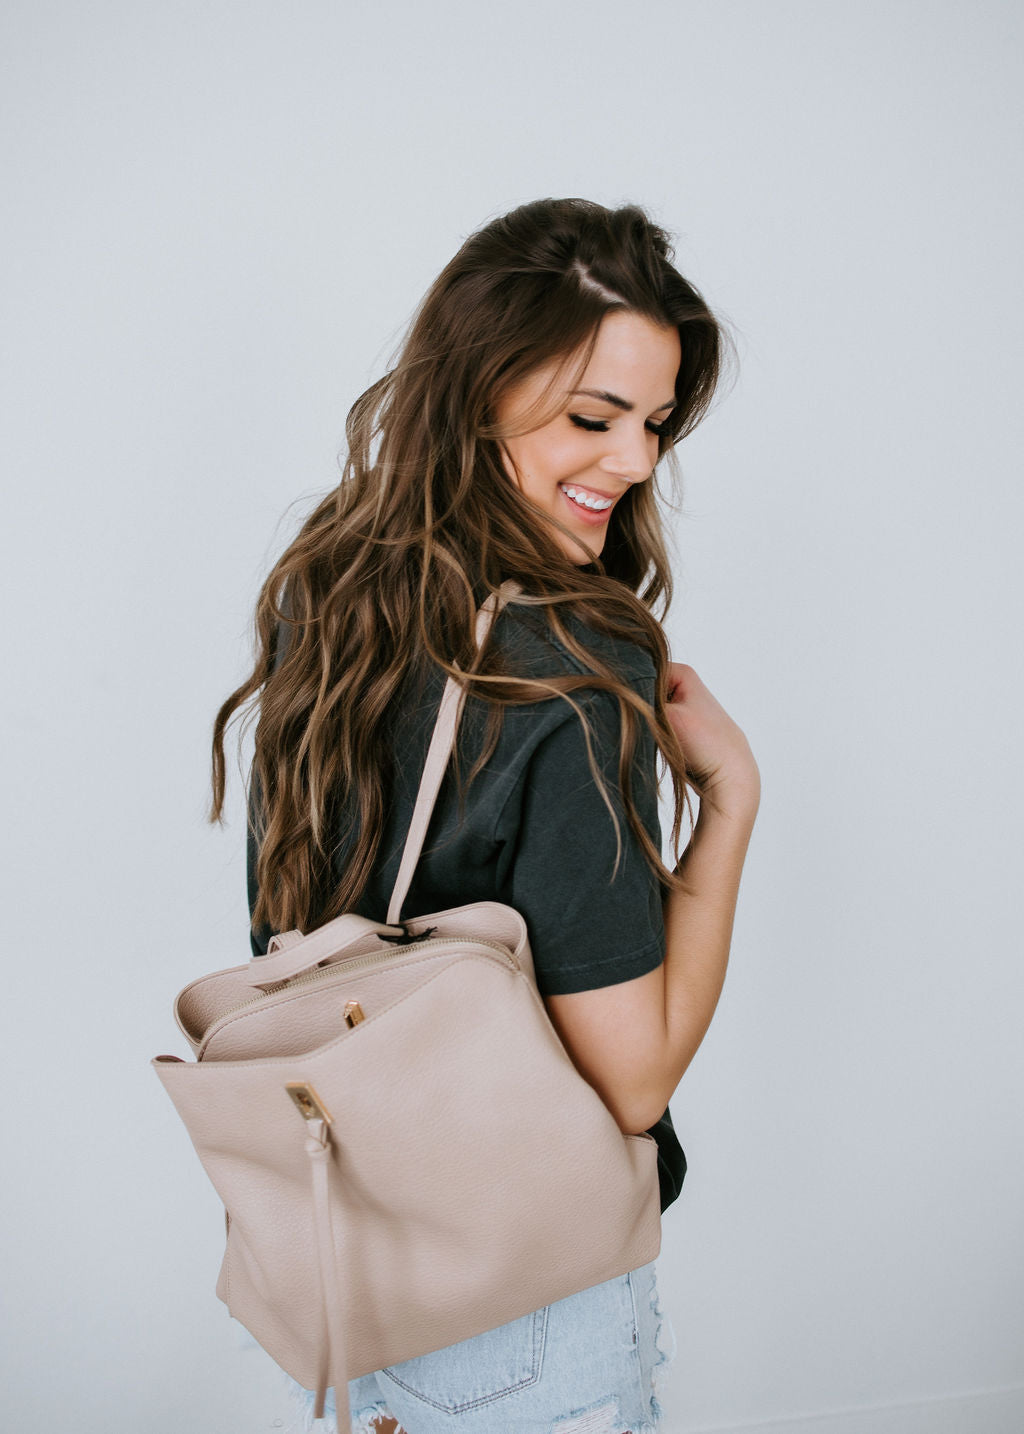 Malaga Backpack - Moda Luxe